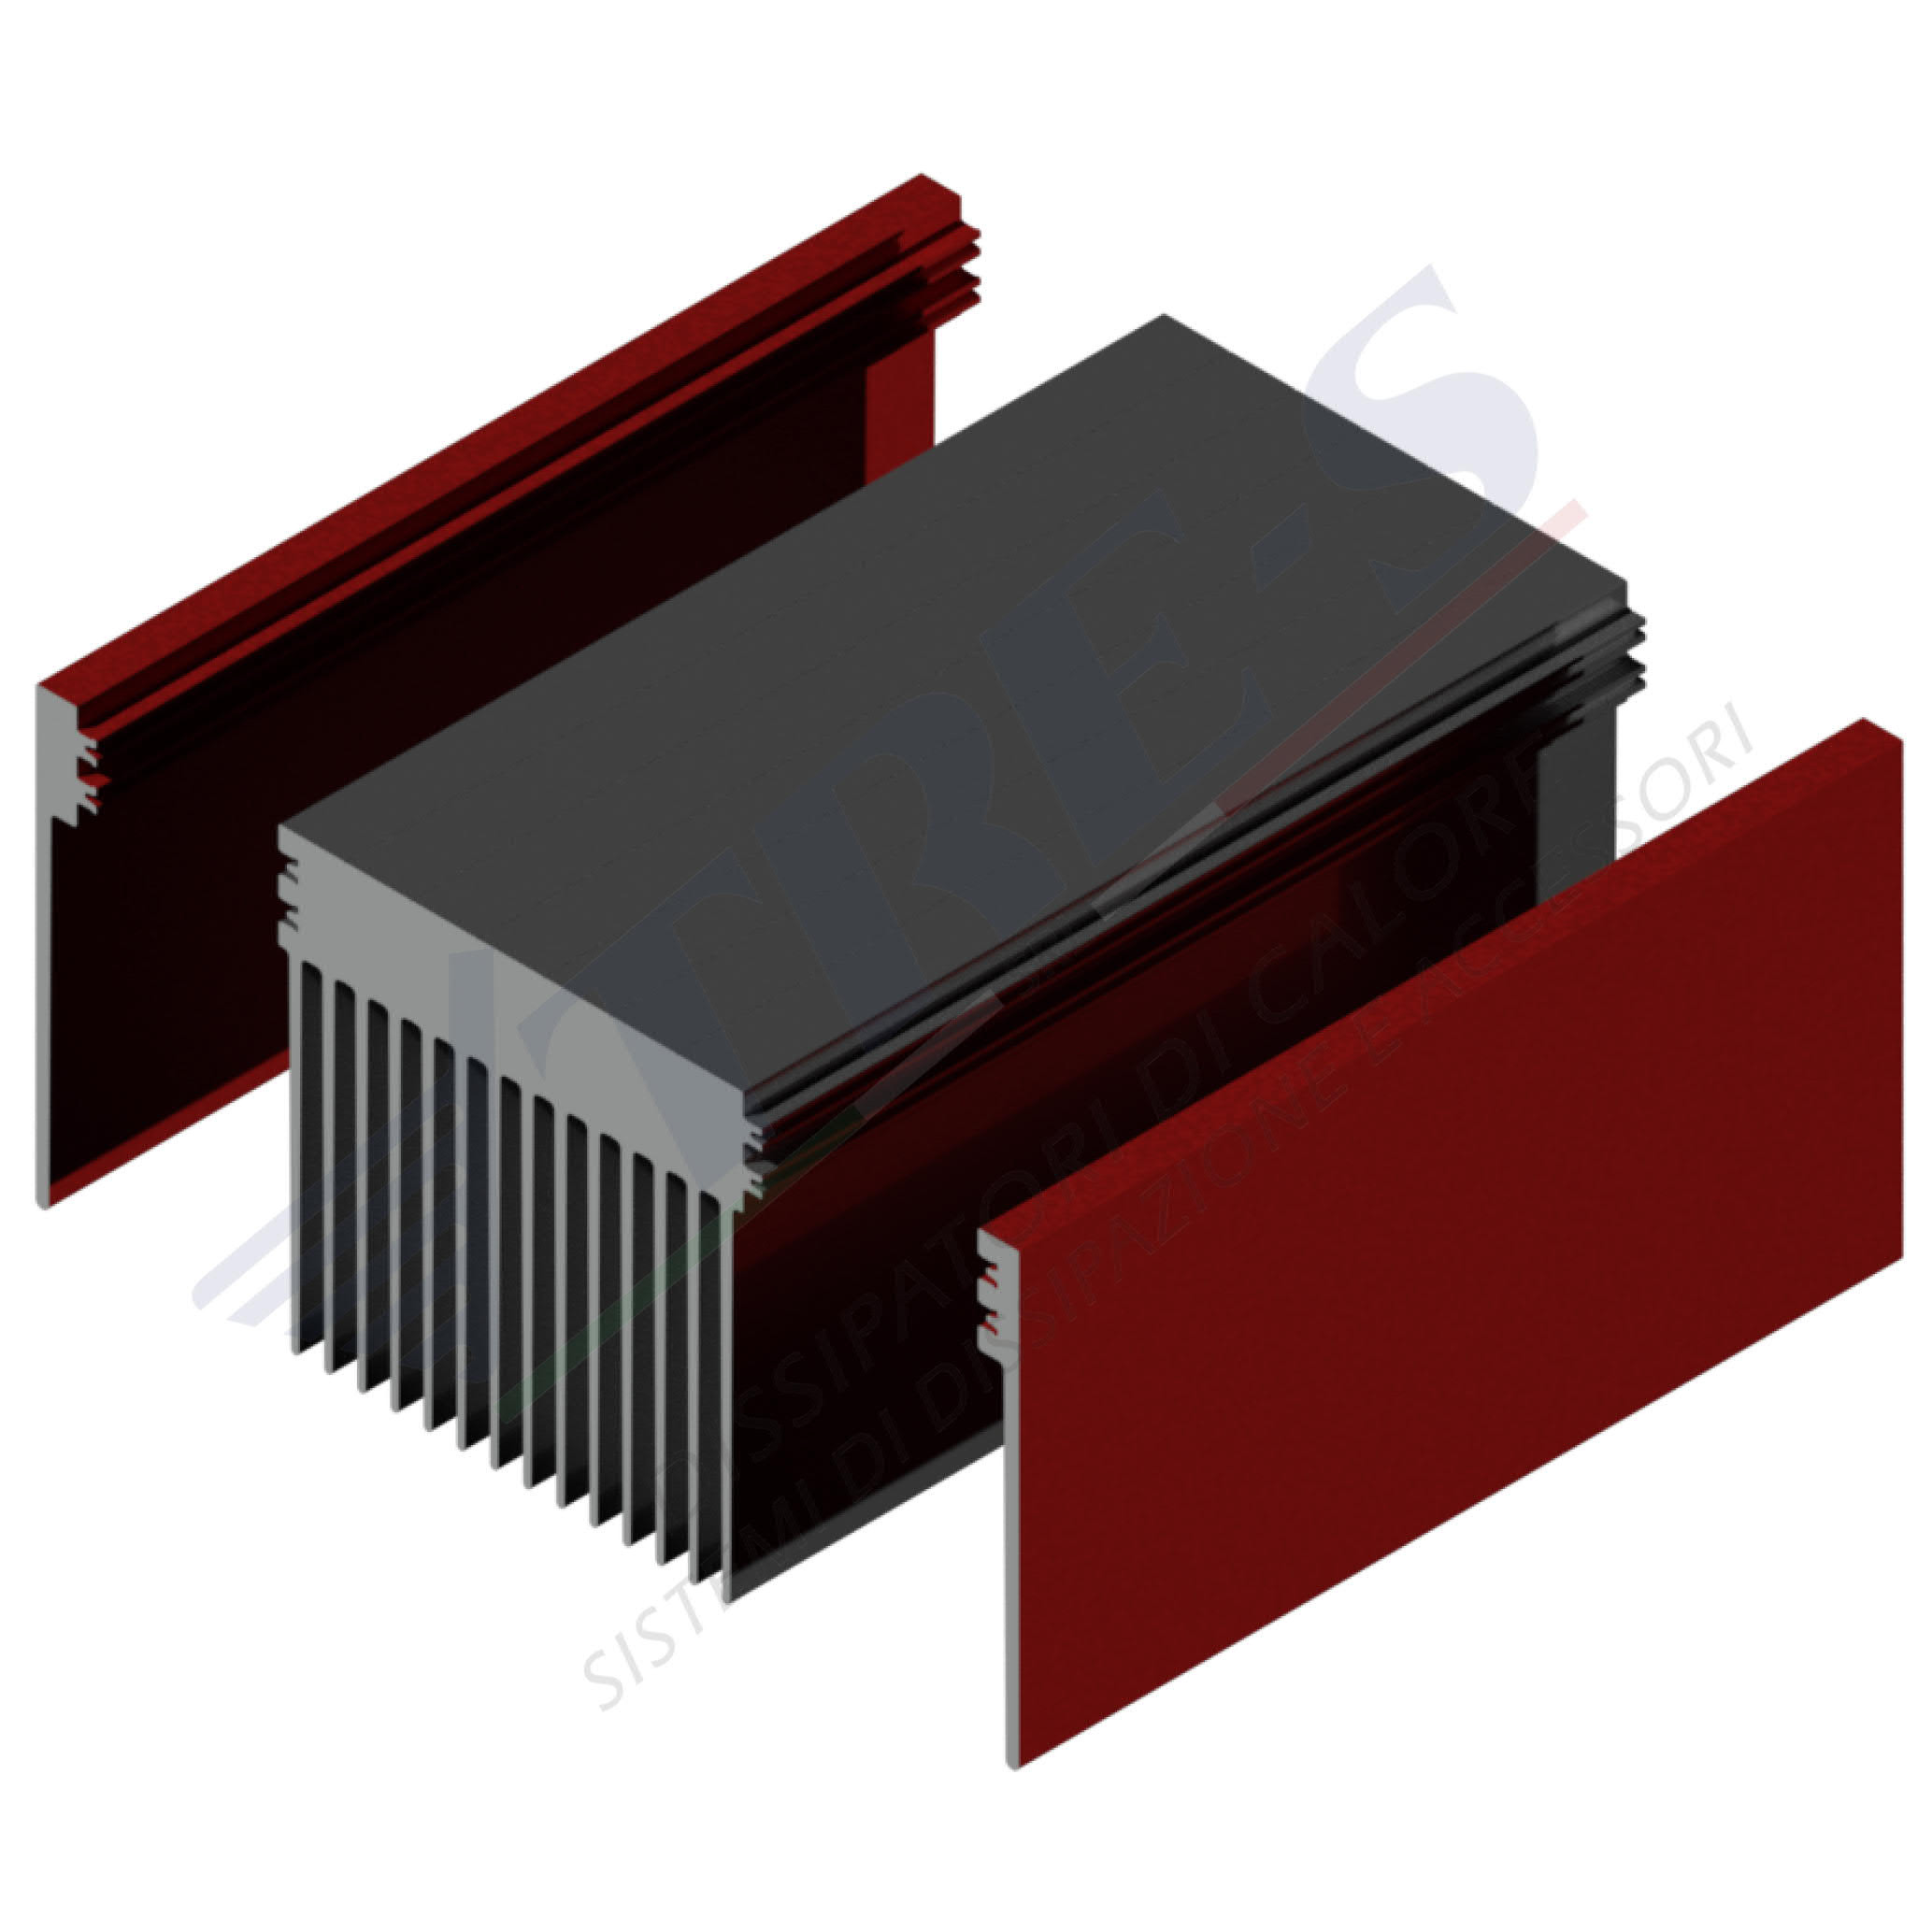 PRI1028AB - Embedded heat sinks